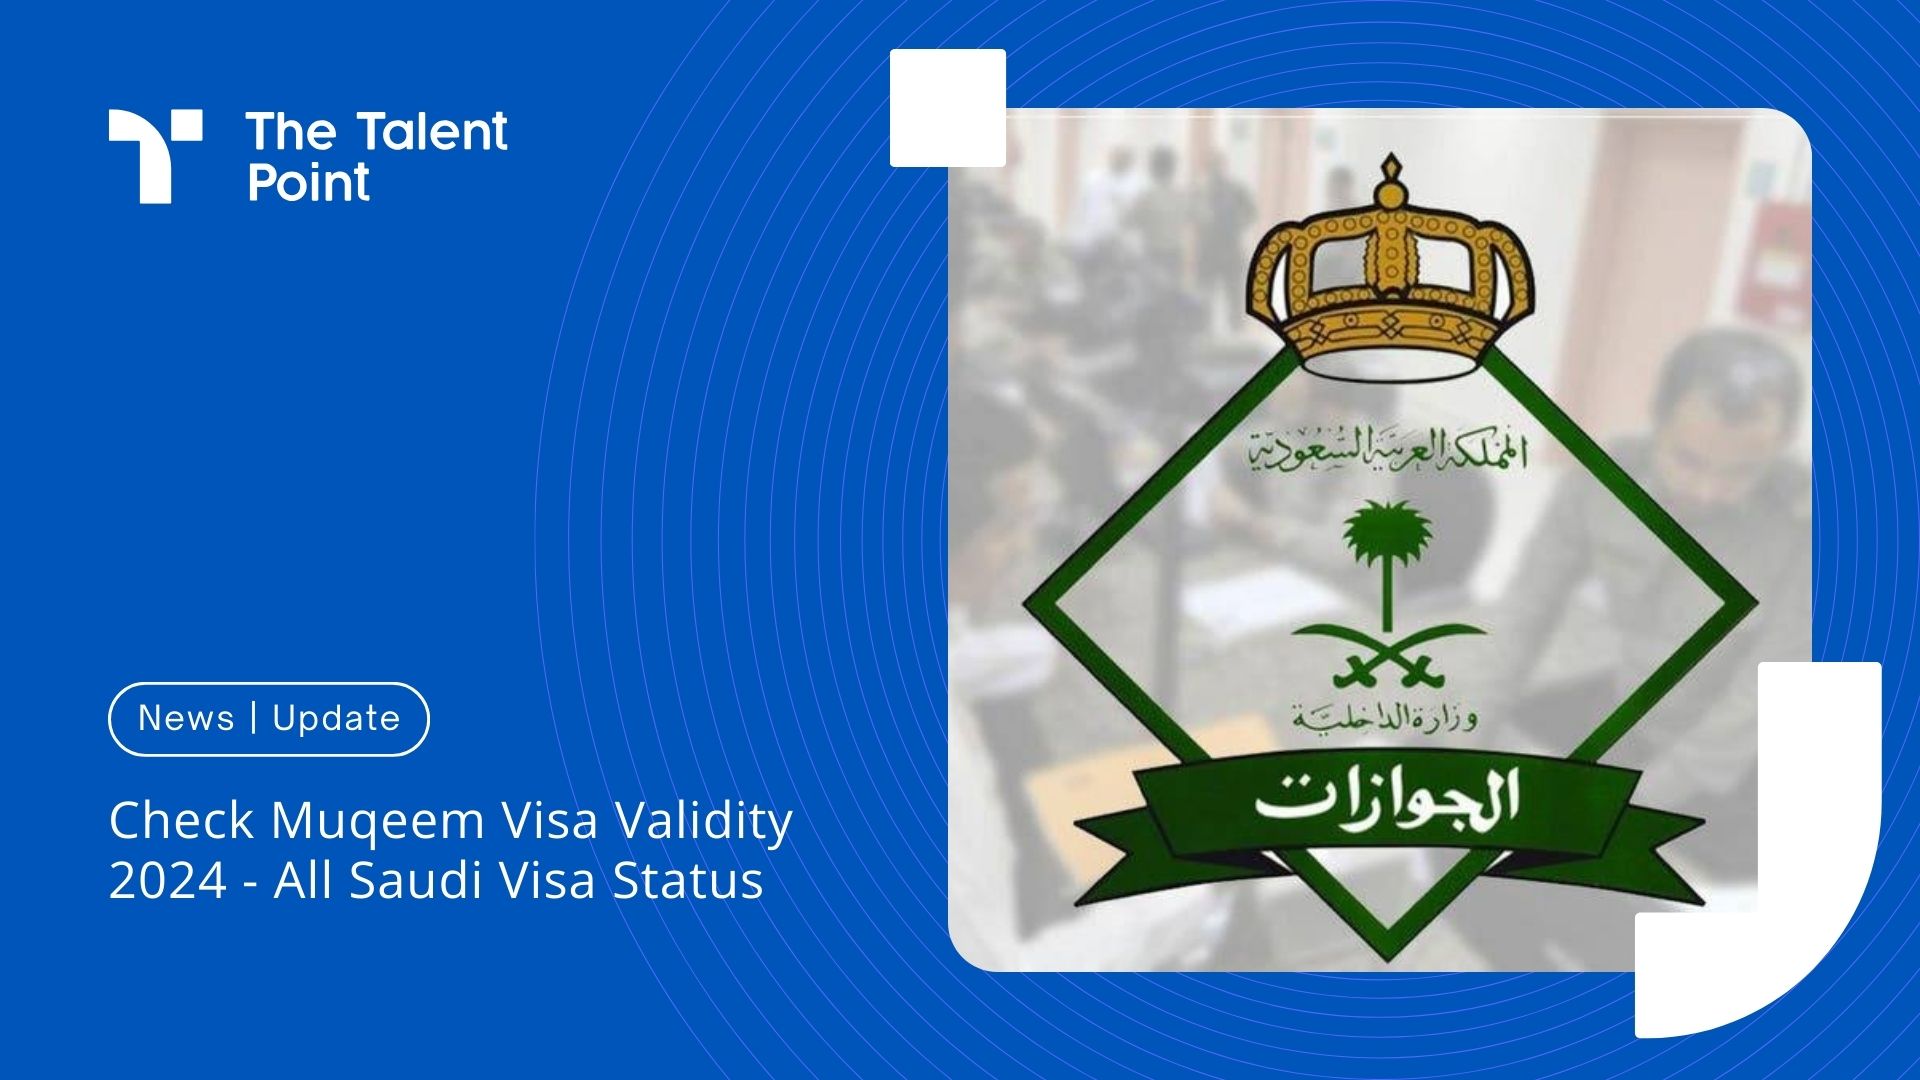 Check Muqeem Visa Validity 2024 - All Saudi Visa Status